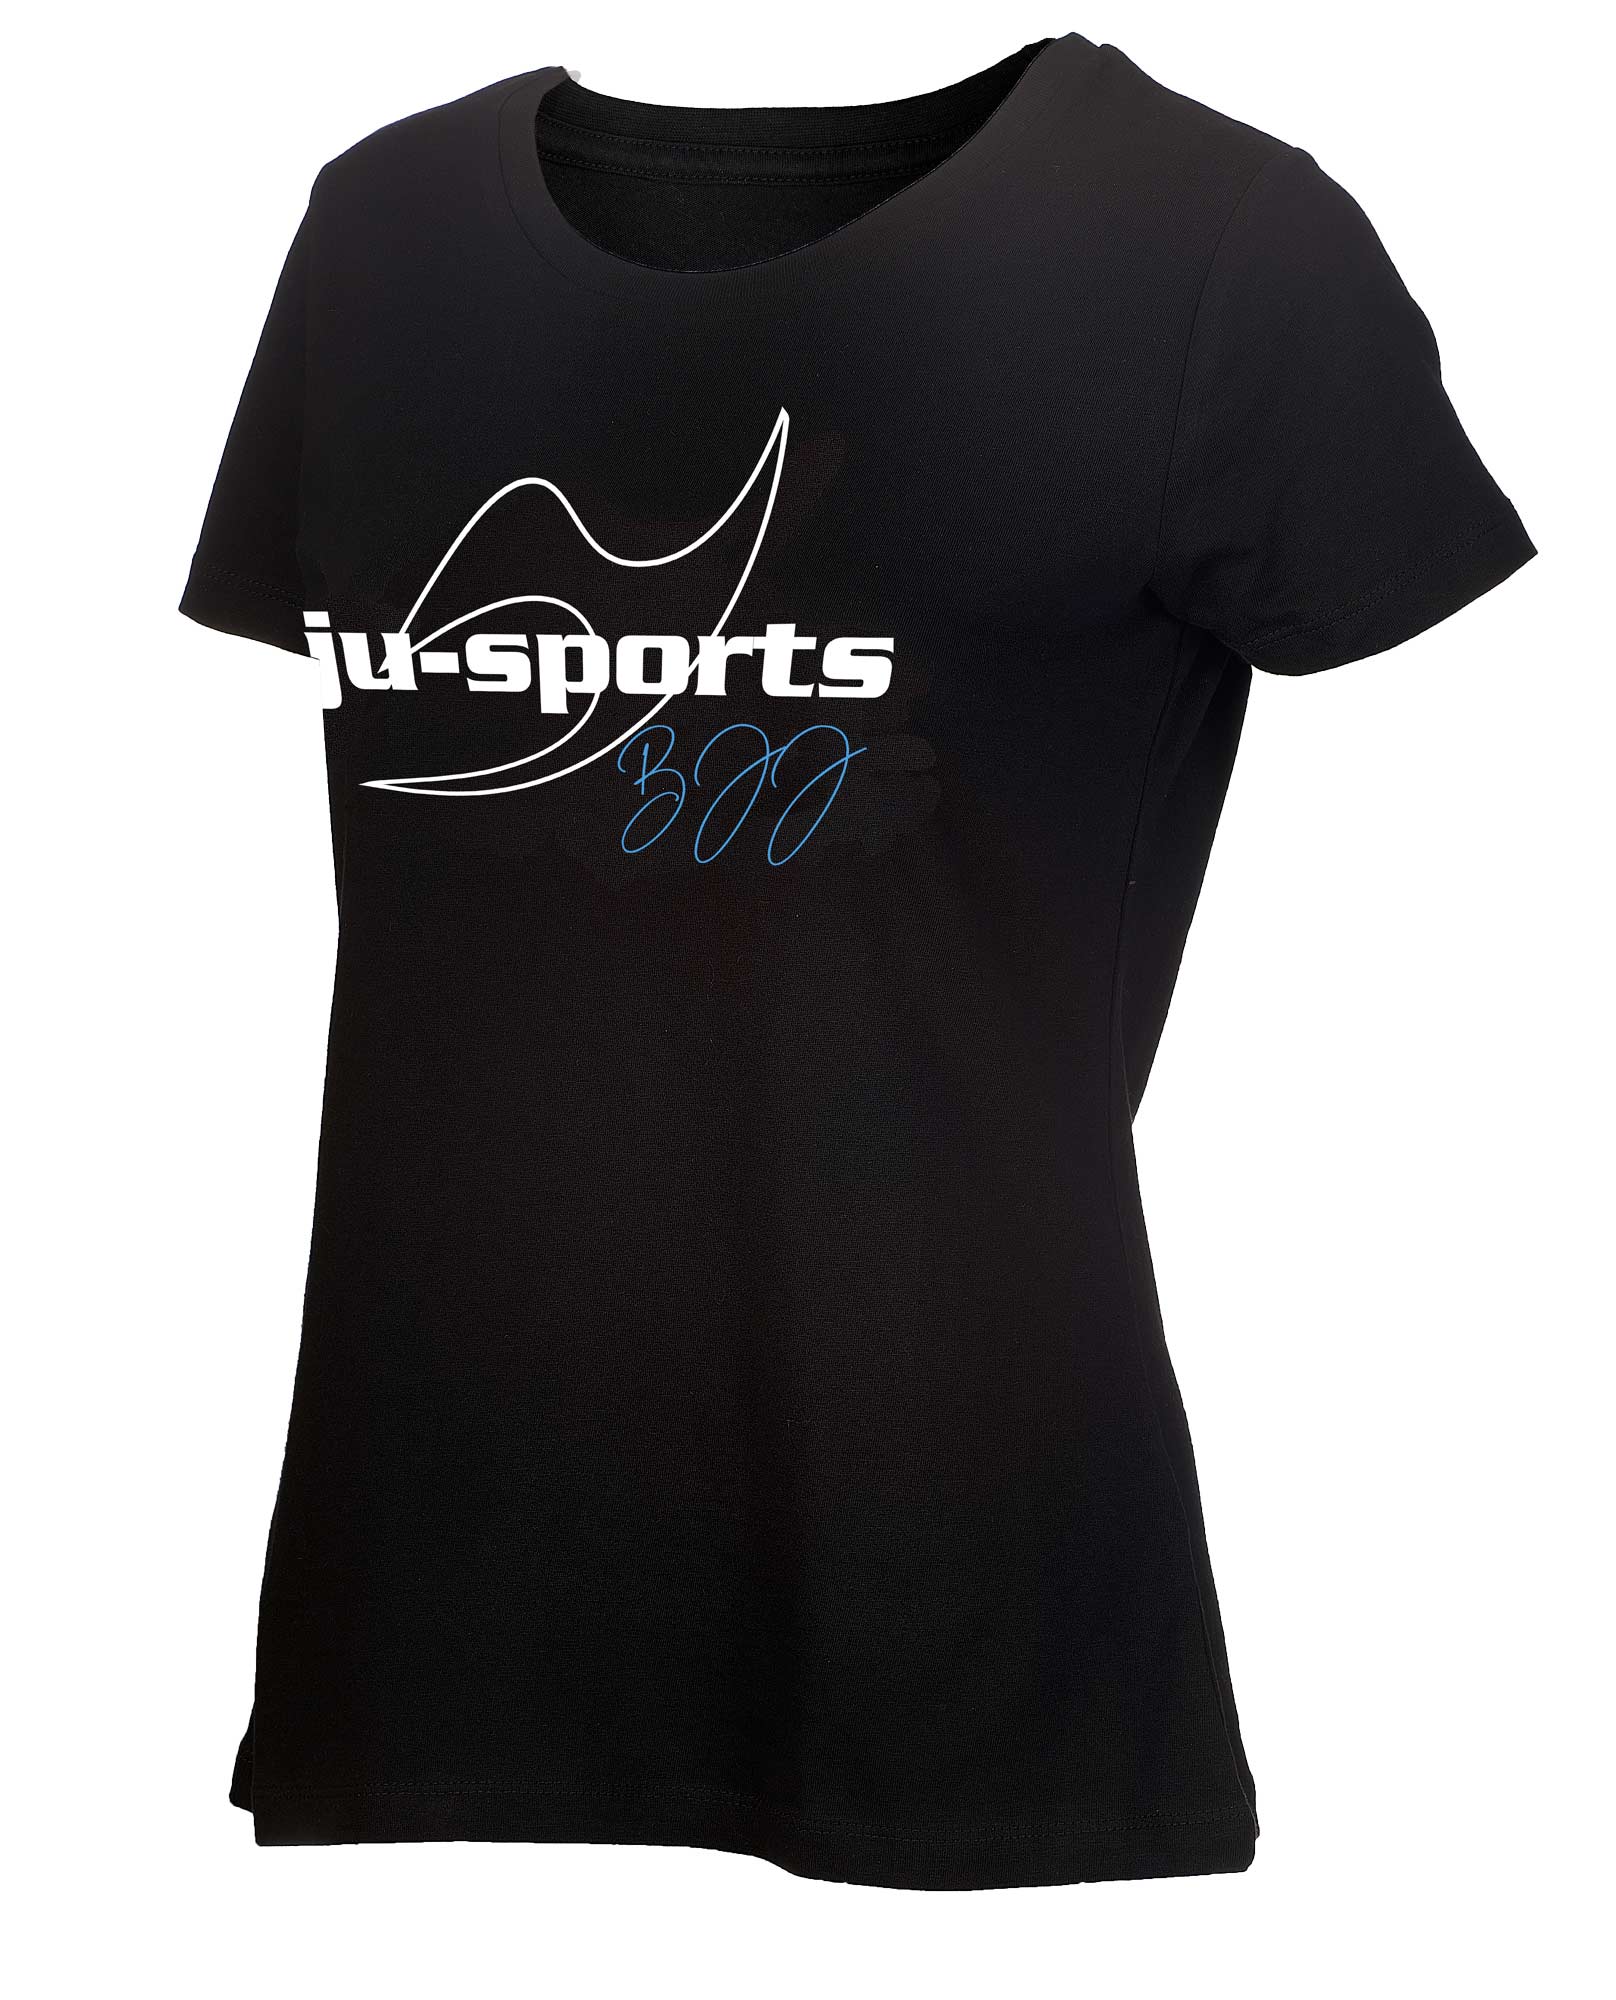 Ju-Sports Signature Line "BJJ" T-Shirt ladycut